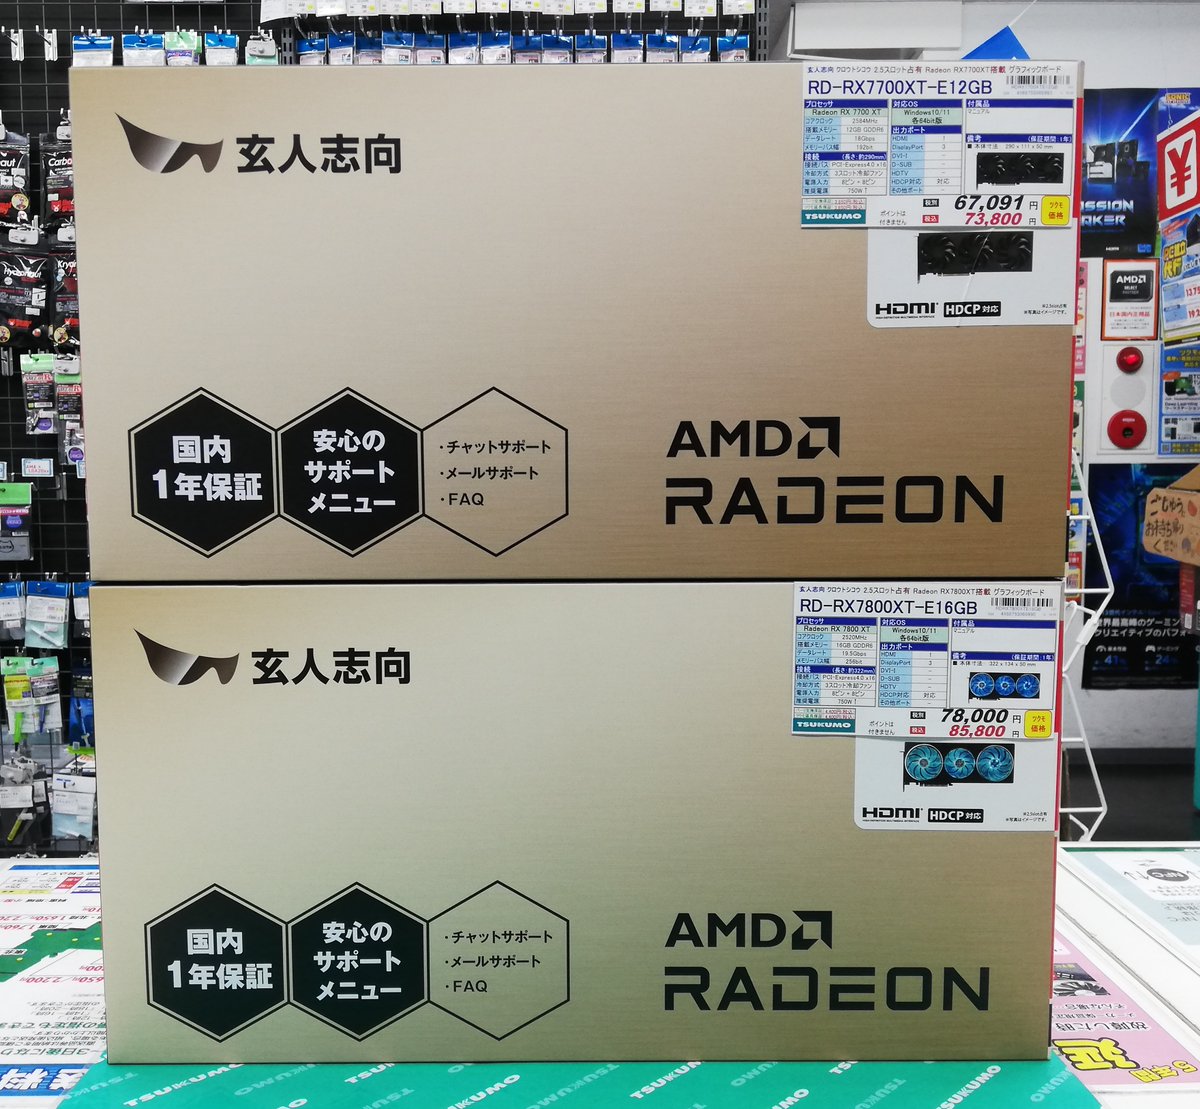 【2Fパーツコーナー】
遅れて到着！
本日発売の #玄人志向 #RX7700XT #RX7800XT 2製品！

#玄人志向
RD-RX7700XT-E12GB 税込：73,800円
RD-RX7800XT-E16GB 税込：85,800円

🕶✨

#Radeon